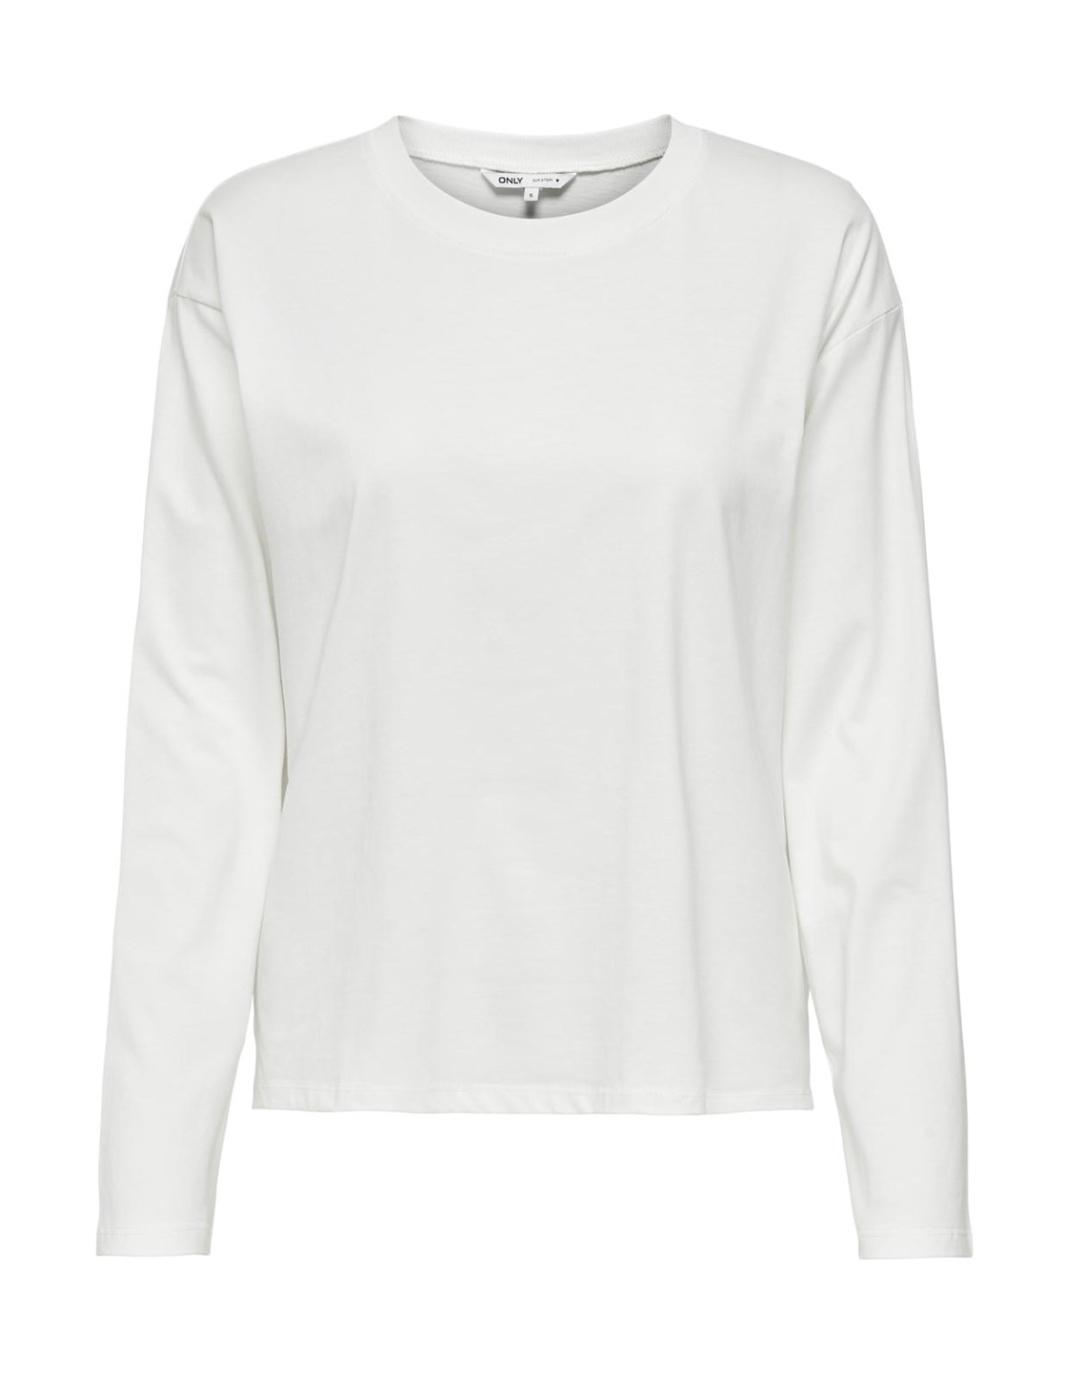 Camiseta Only Laura blanco holgada manga larga para mujer